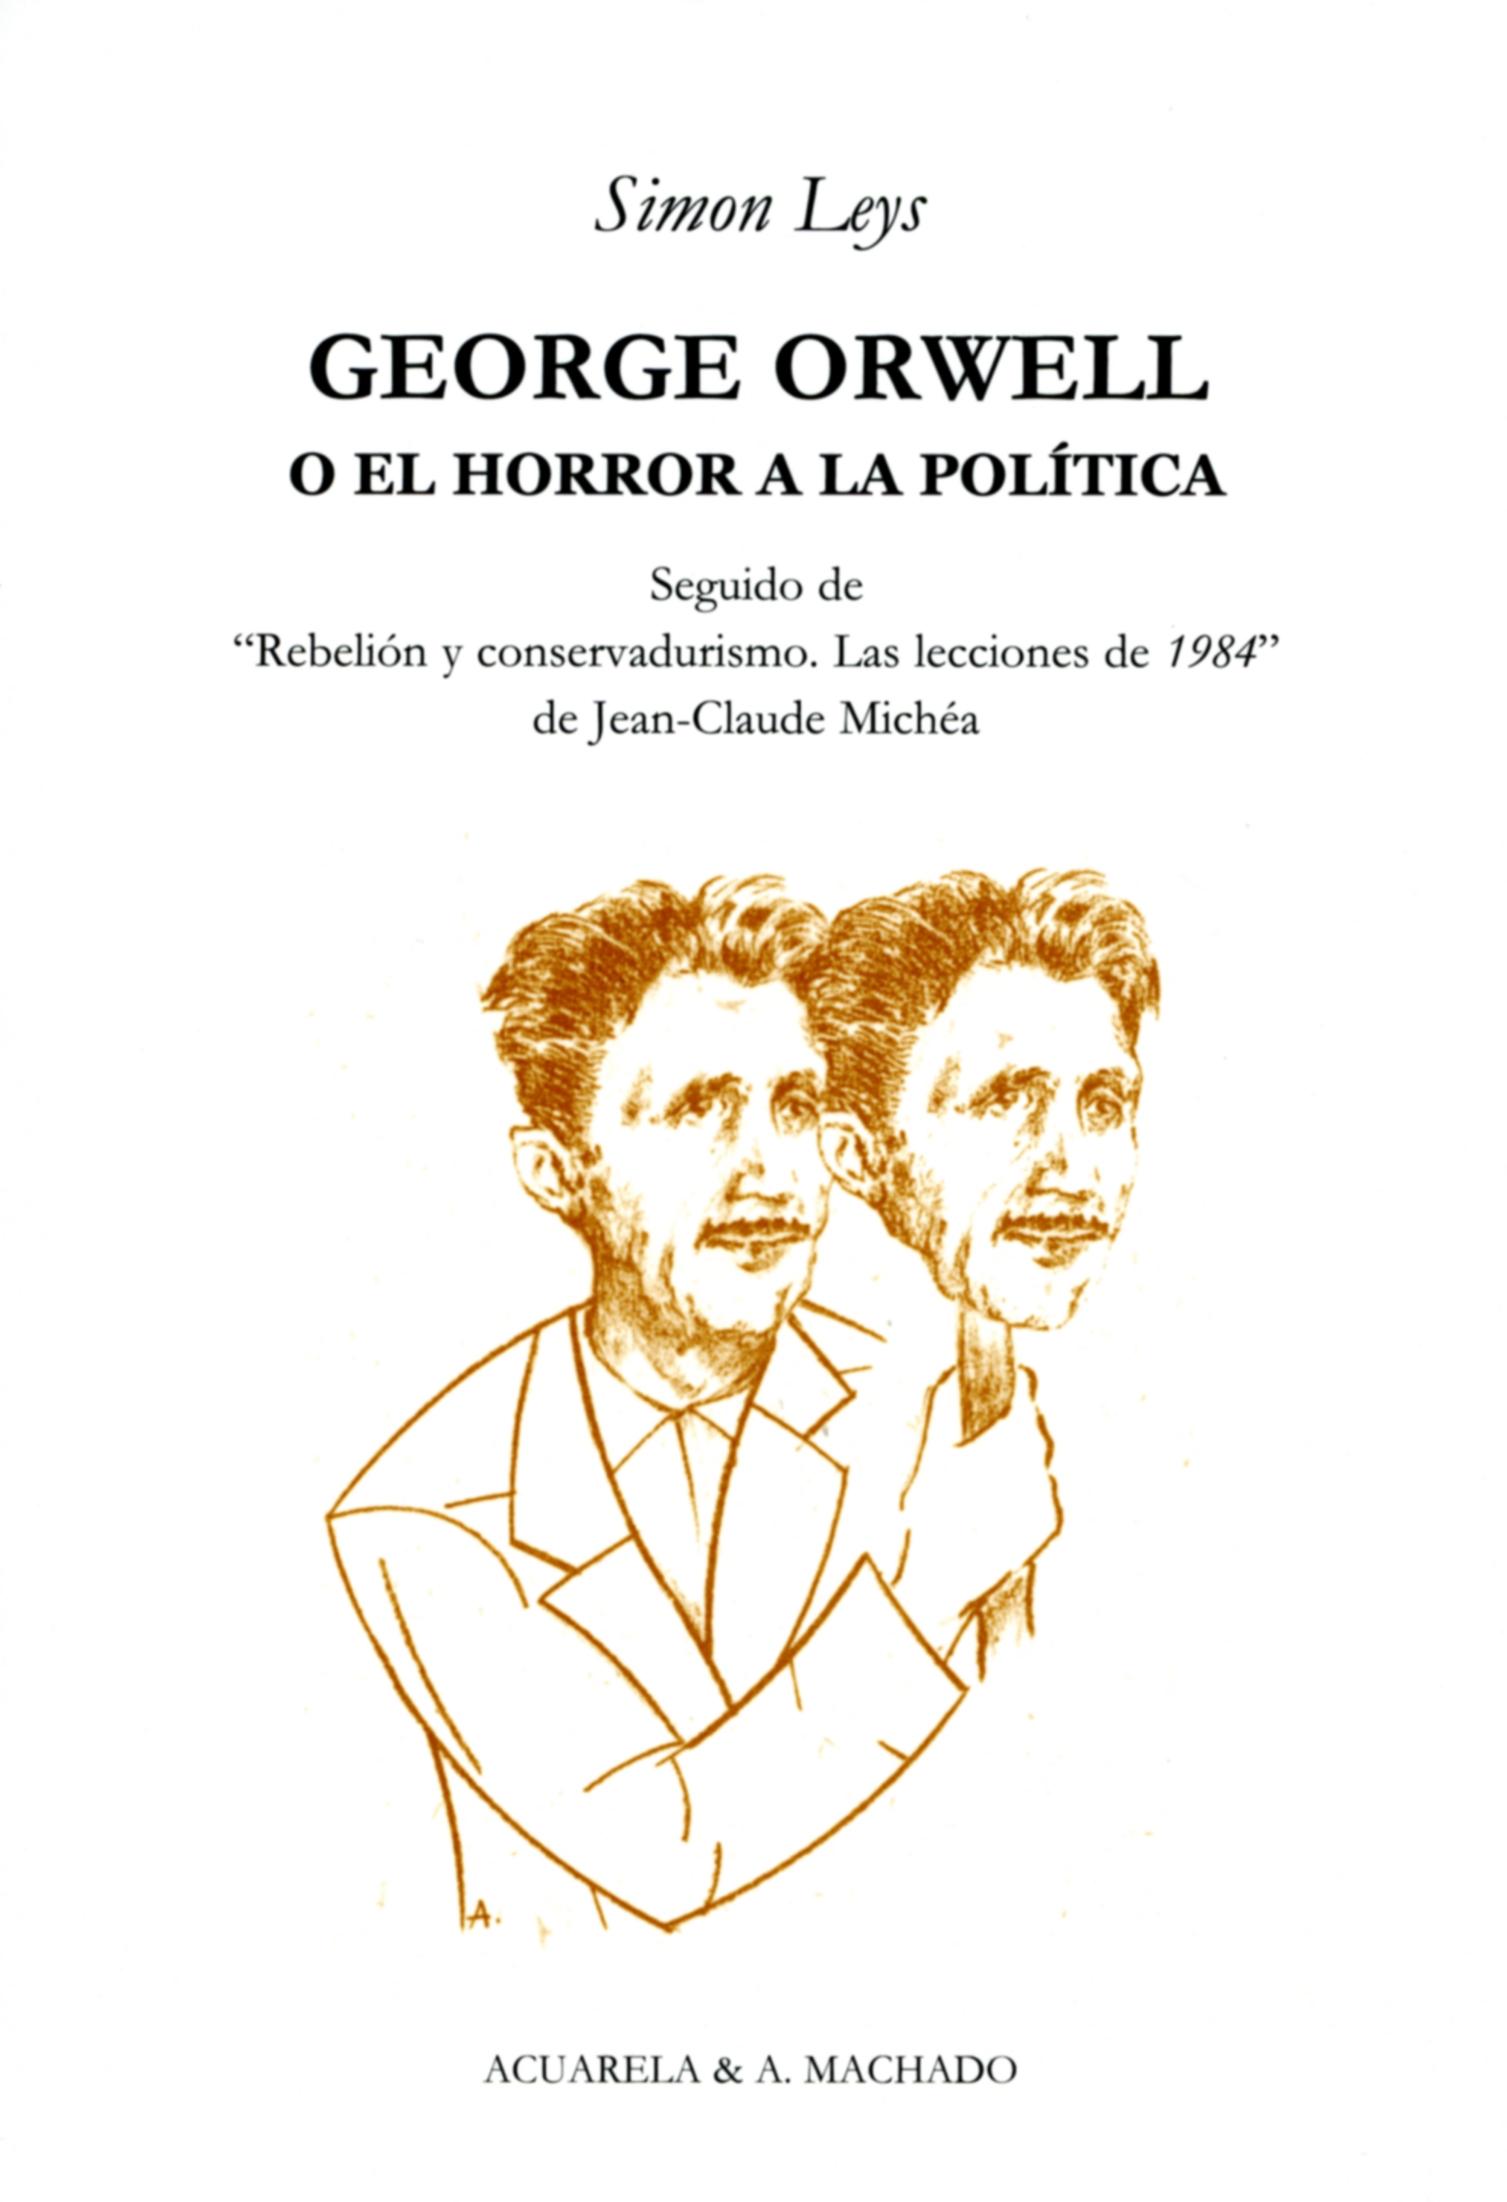 George Orwell o el horror a la política "O EL HORROR A LA POLÍTICA"